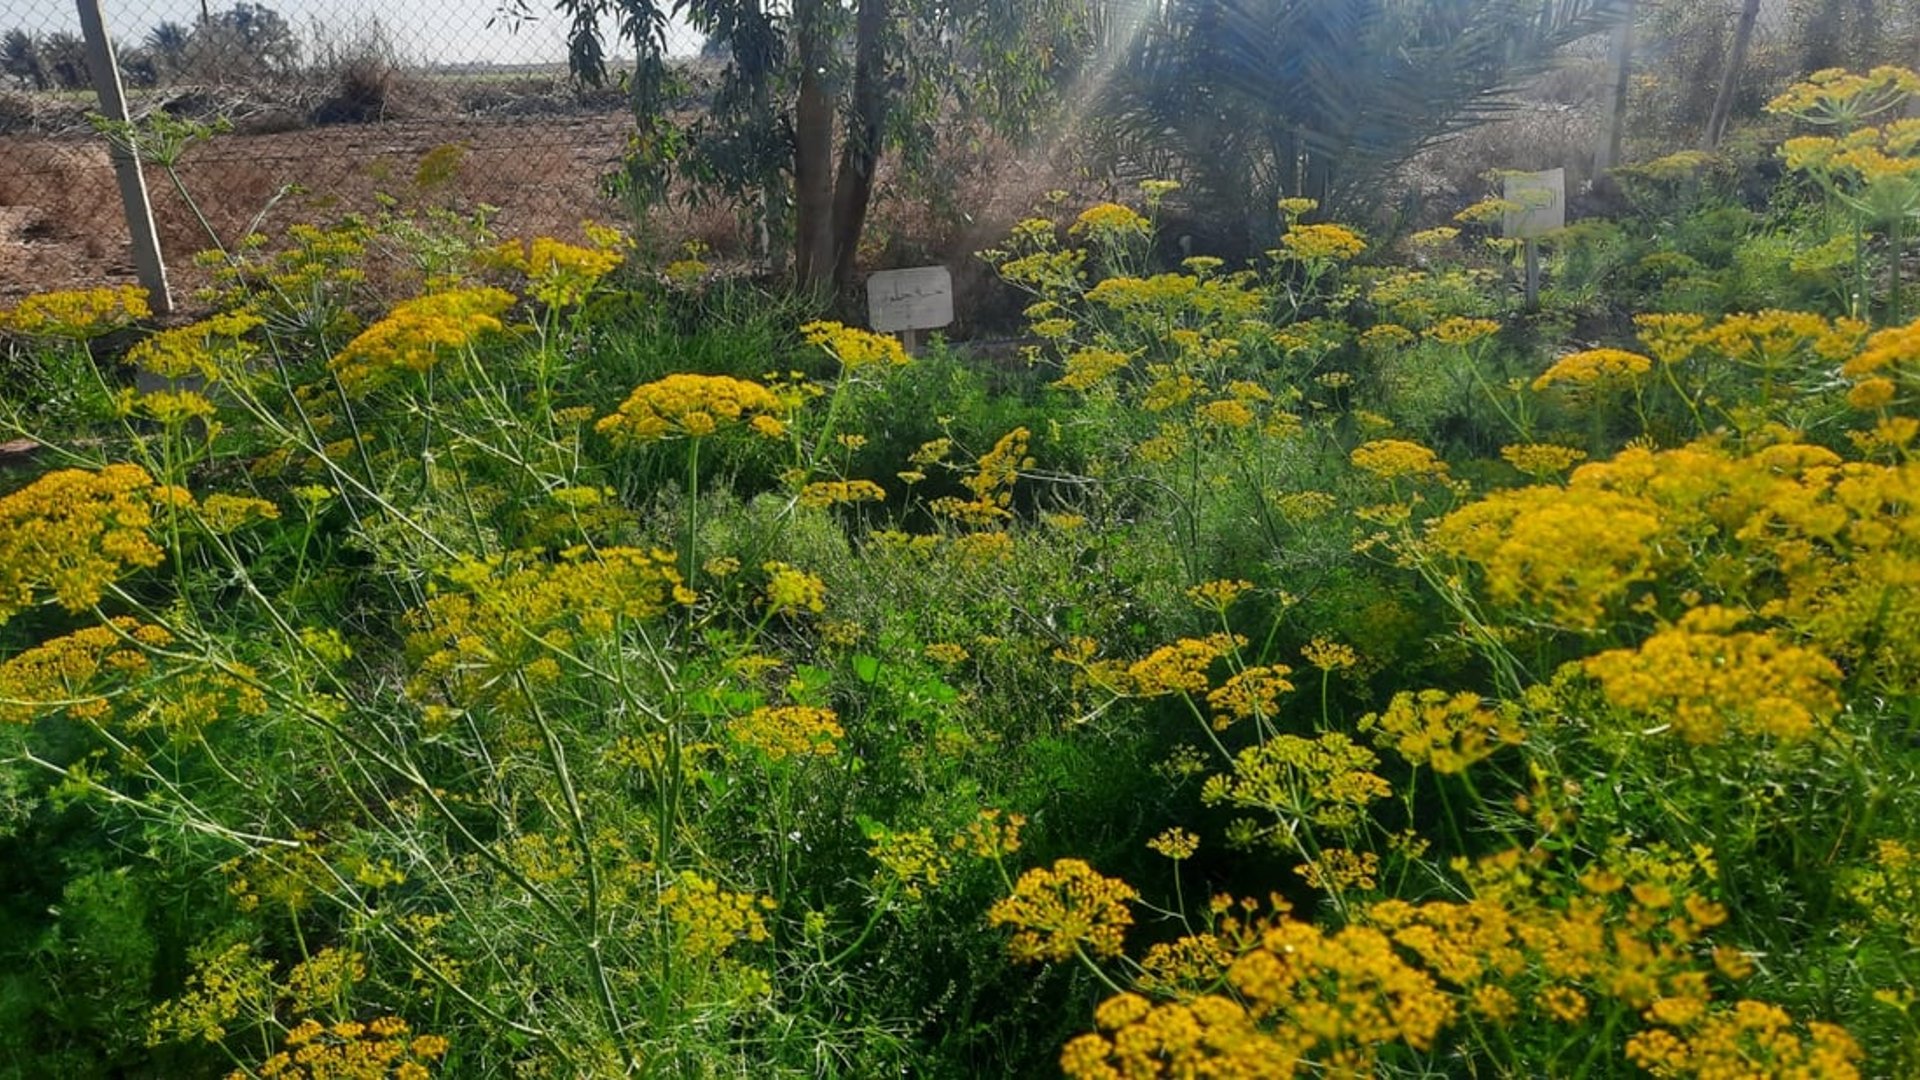 Karbala experiments with organic medicinal plants